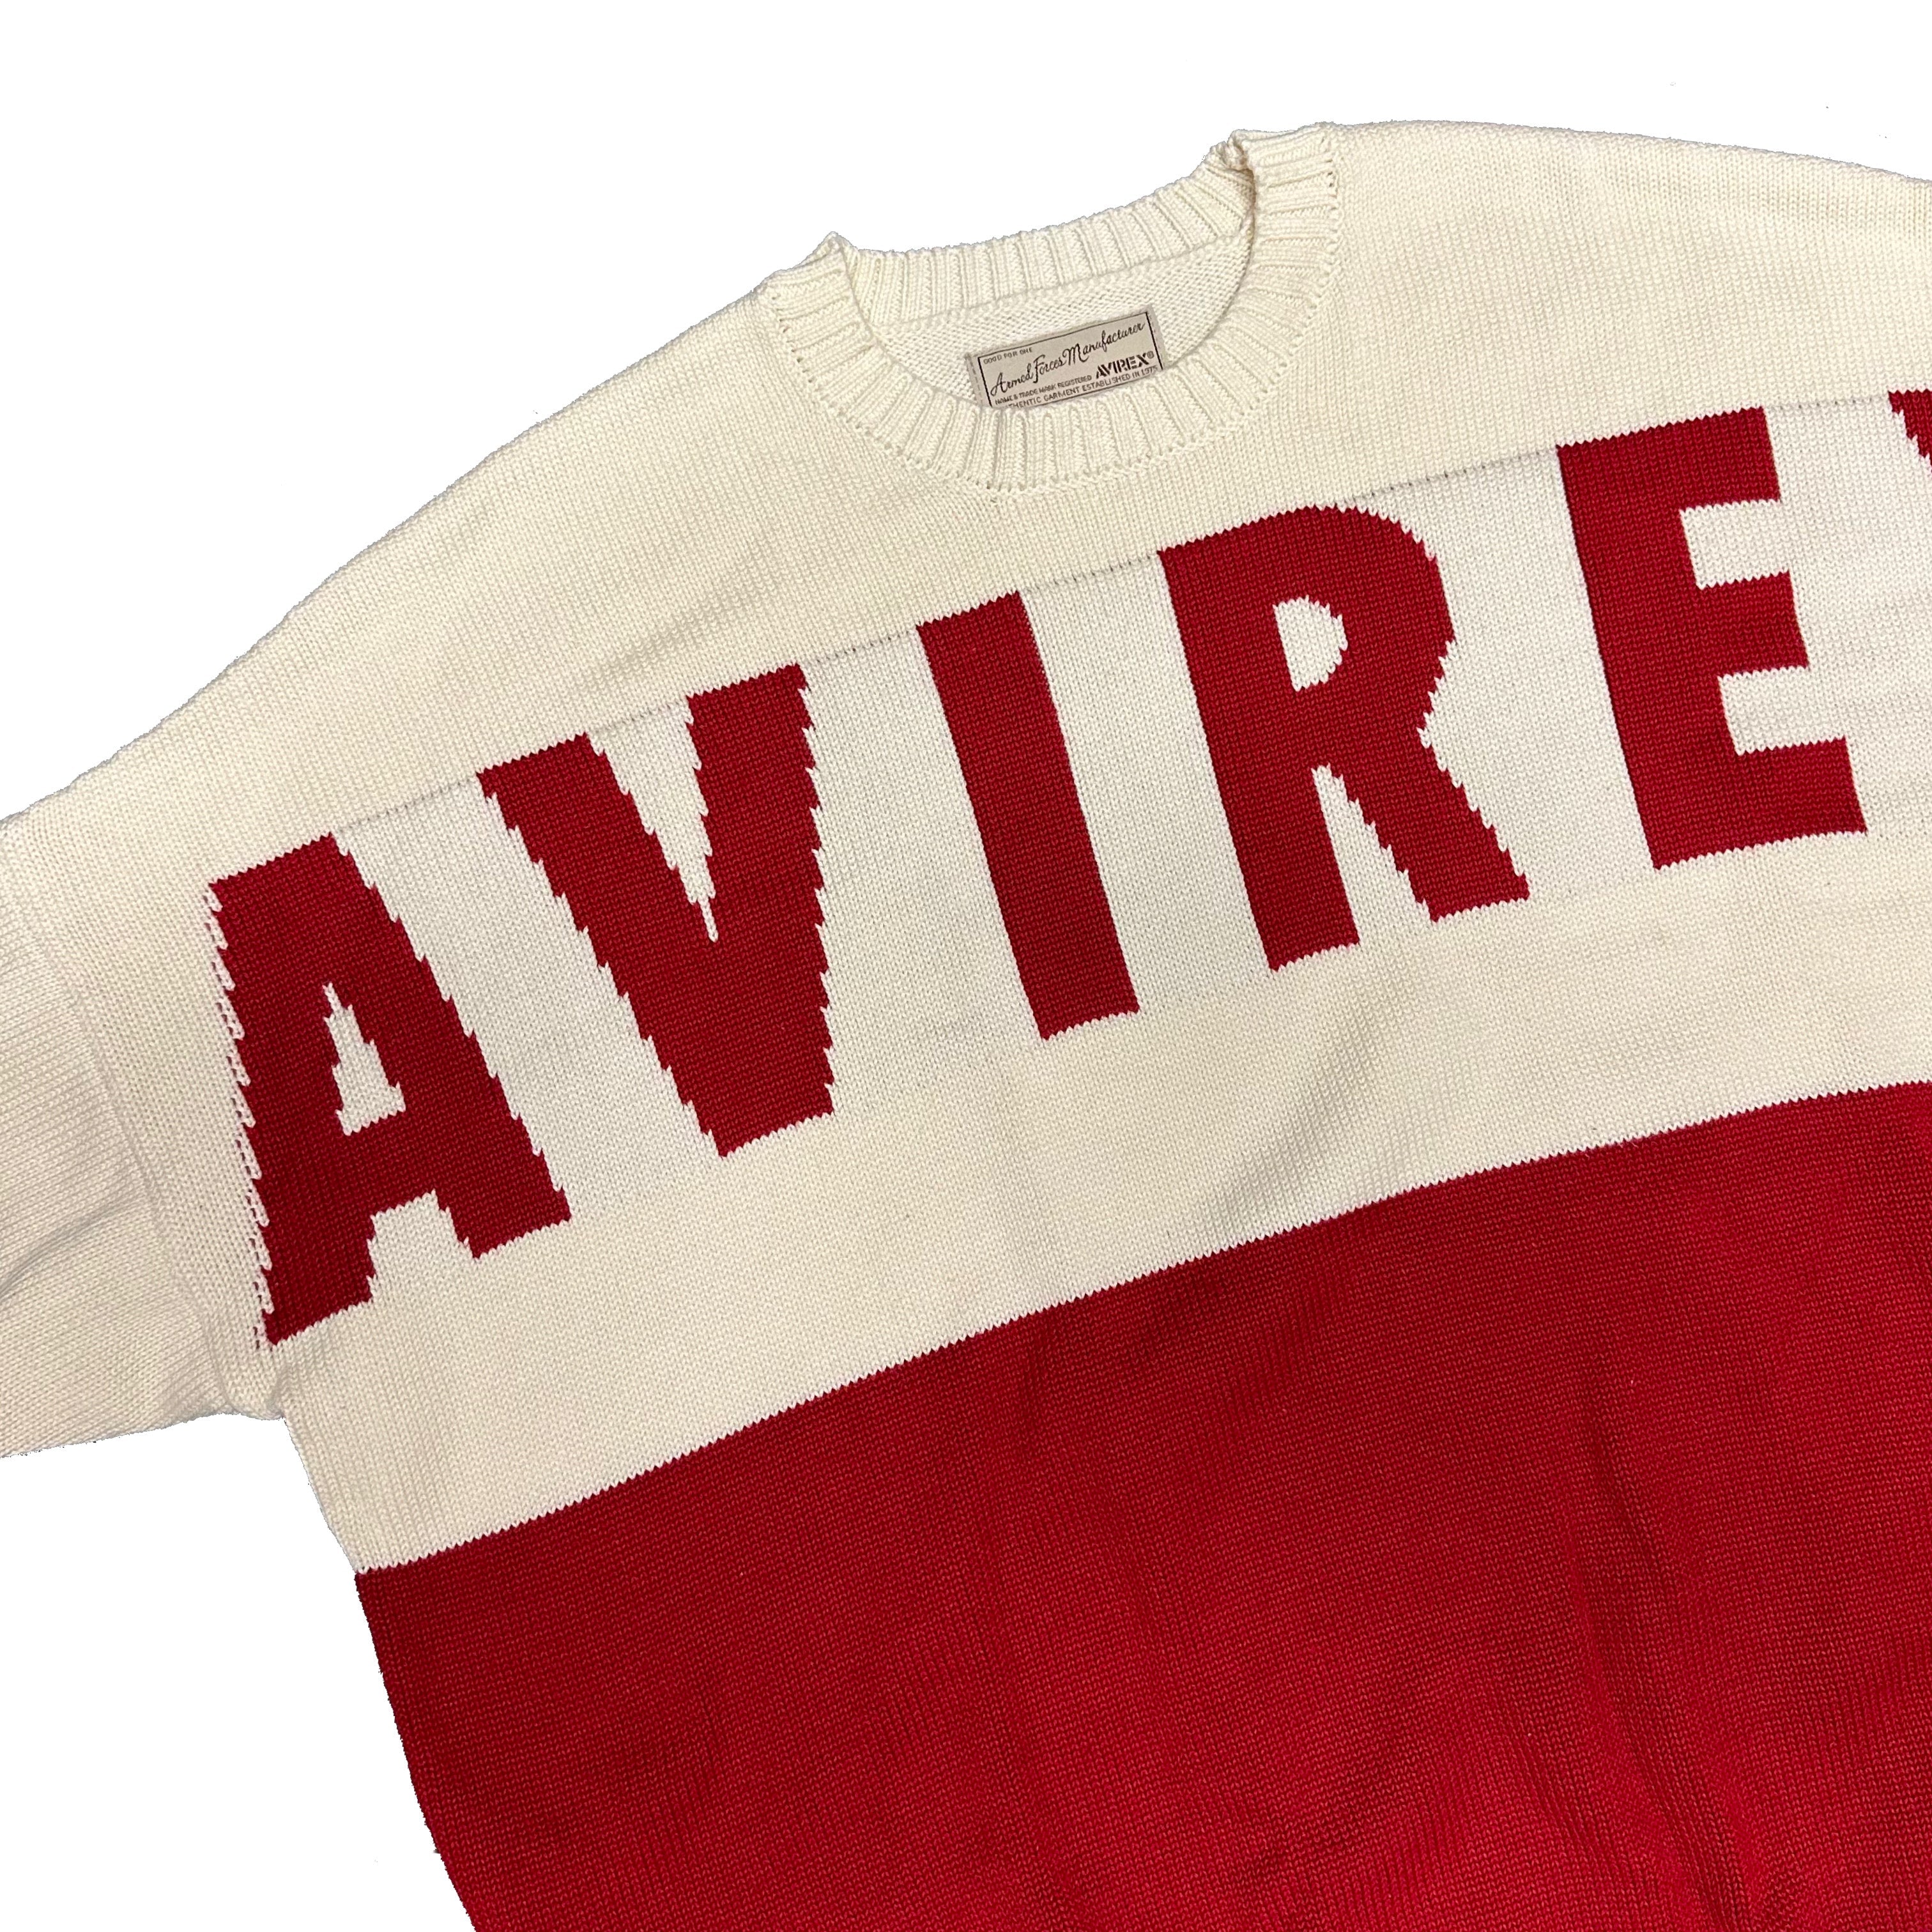 Avirex Spellout Knitted Sweatshirt ( L )